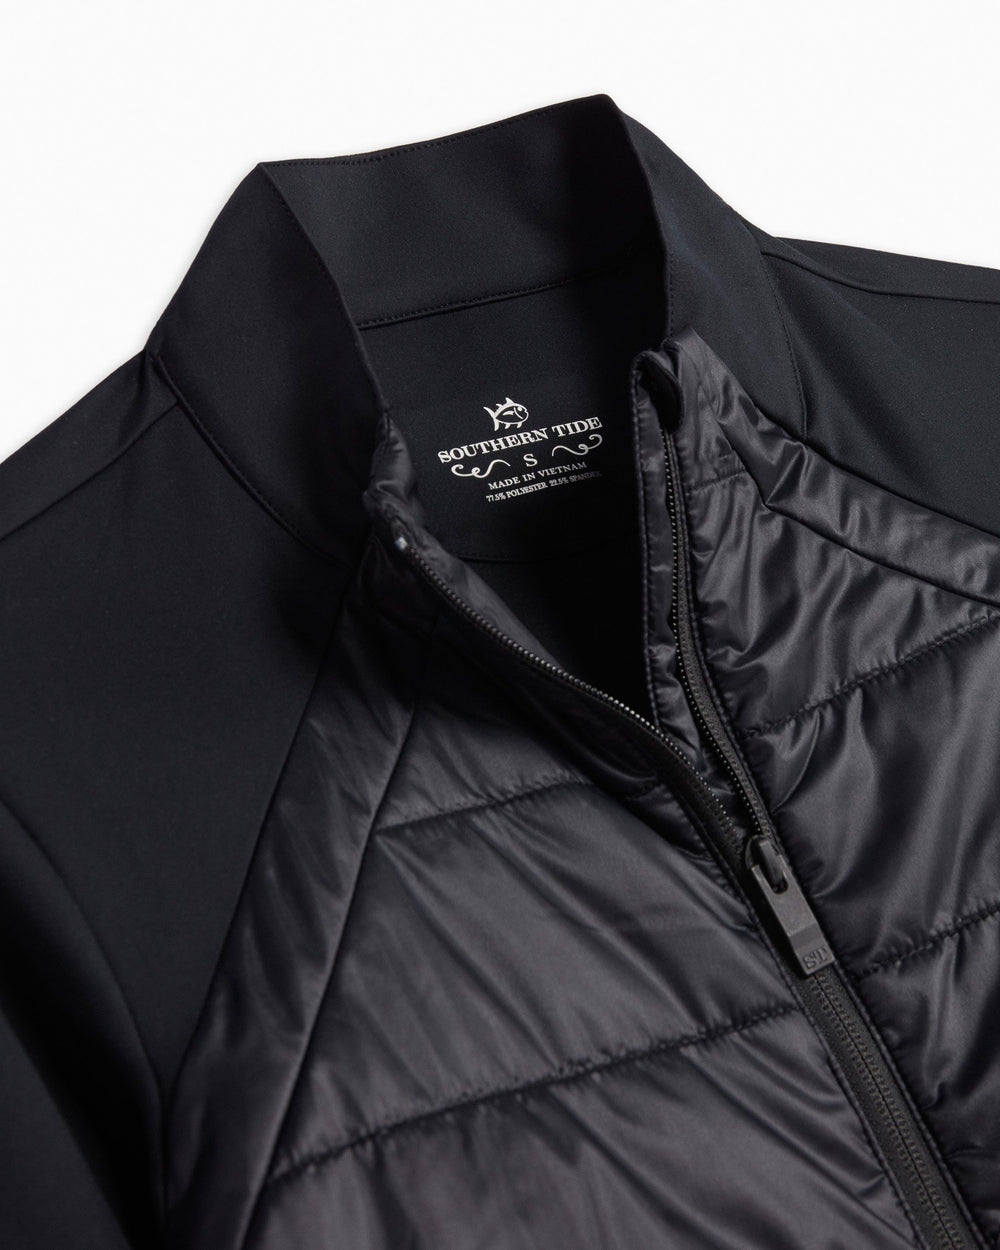 The flat detail of the Women's Josette Mixed Media Full Zip Athletic Jacket - Black